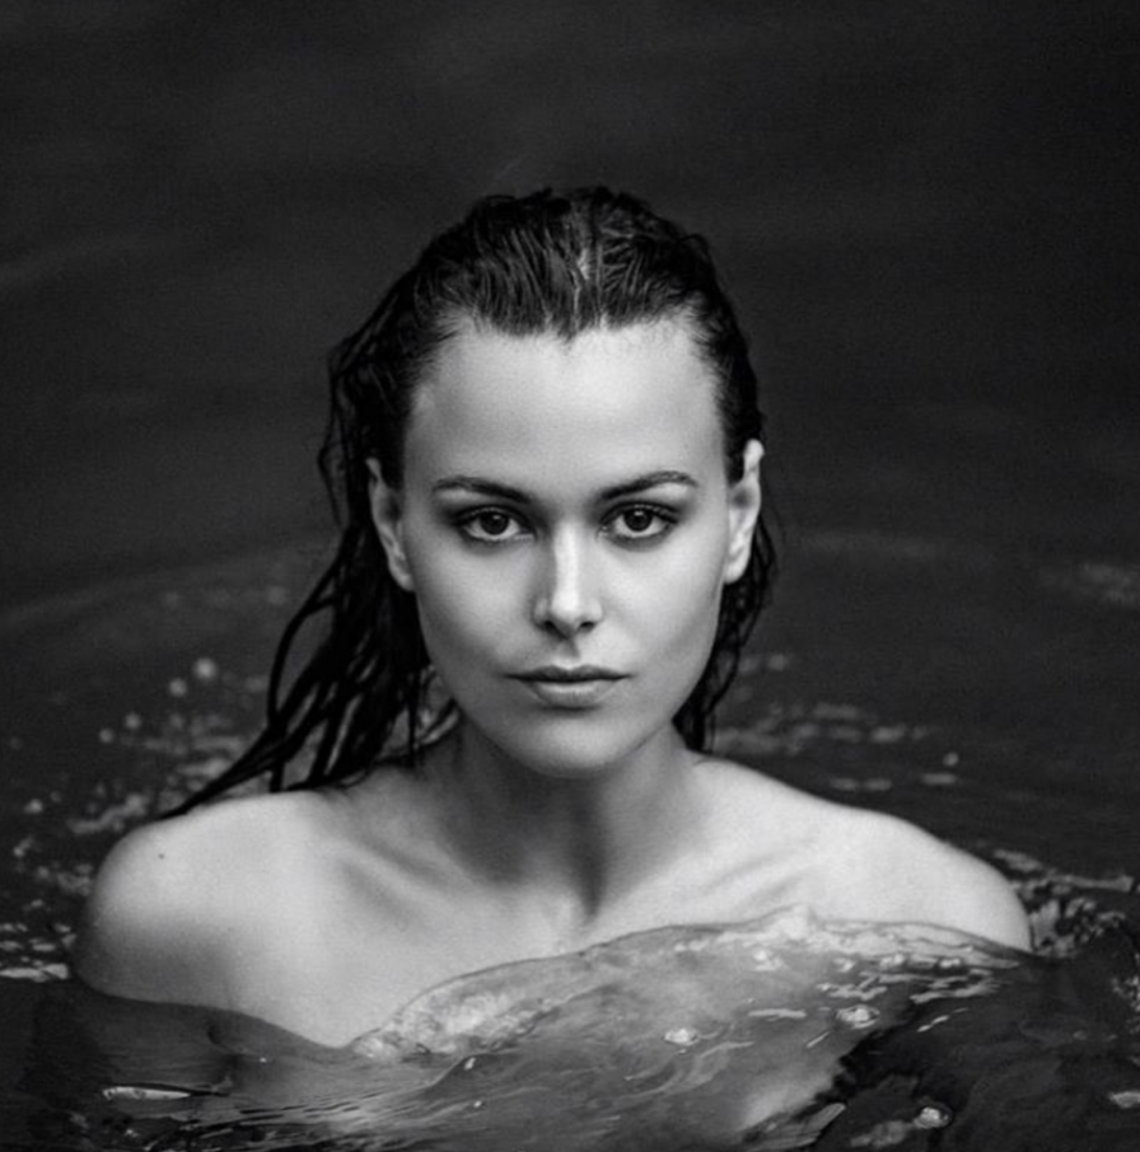 Balistarz-model-Diana-Mihaila-black-and-white-portrait-shoot-in-a-pool